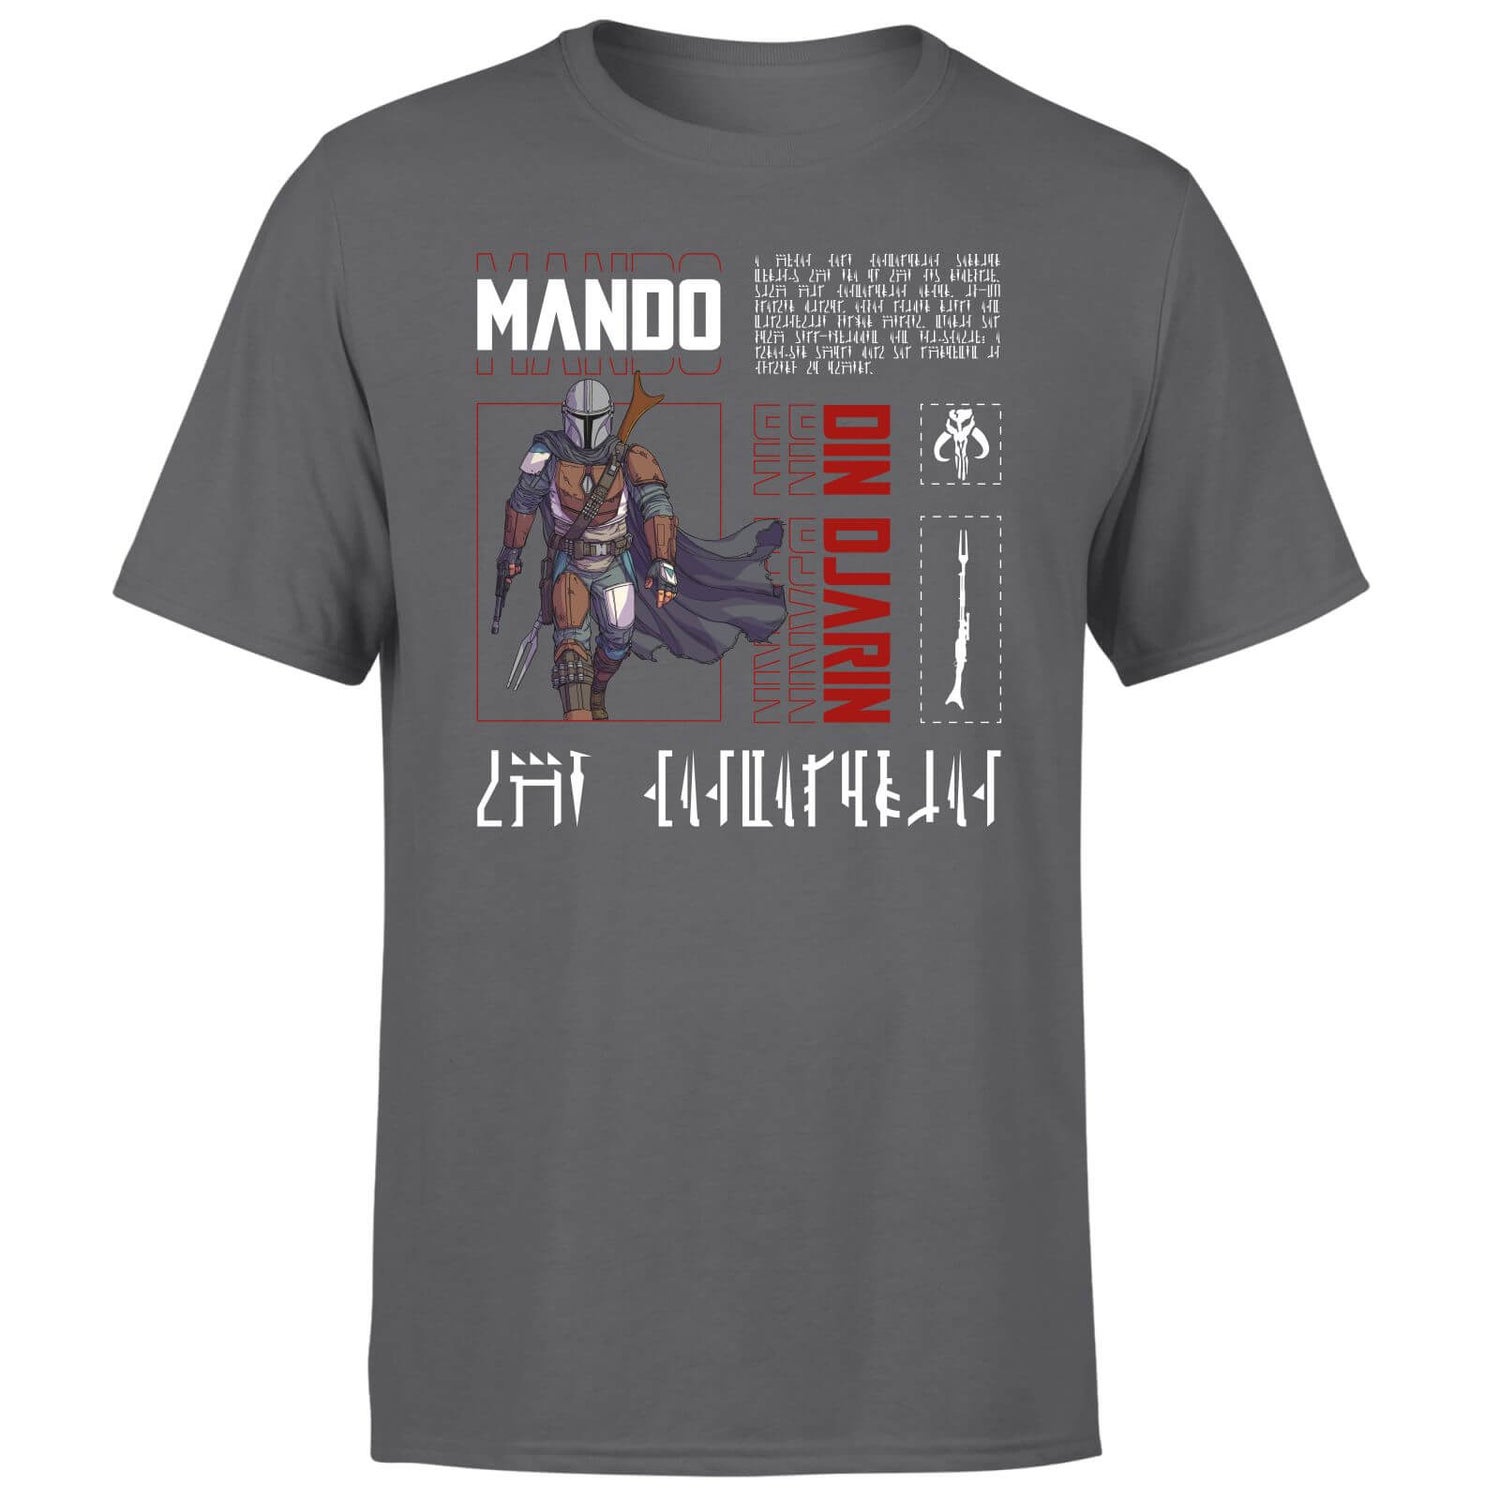 Star Wars The Mandalorian Biography Men's T-Shirt - Charcoal